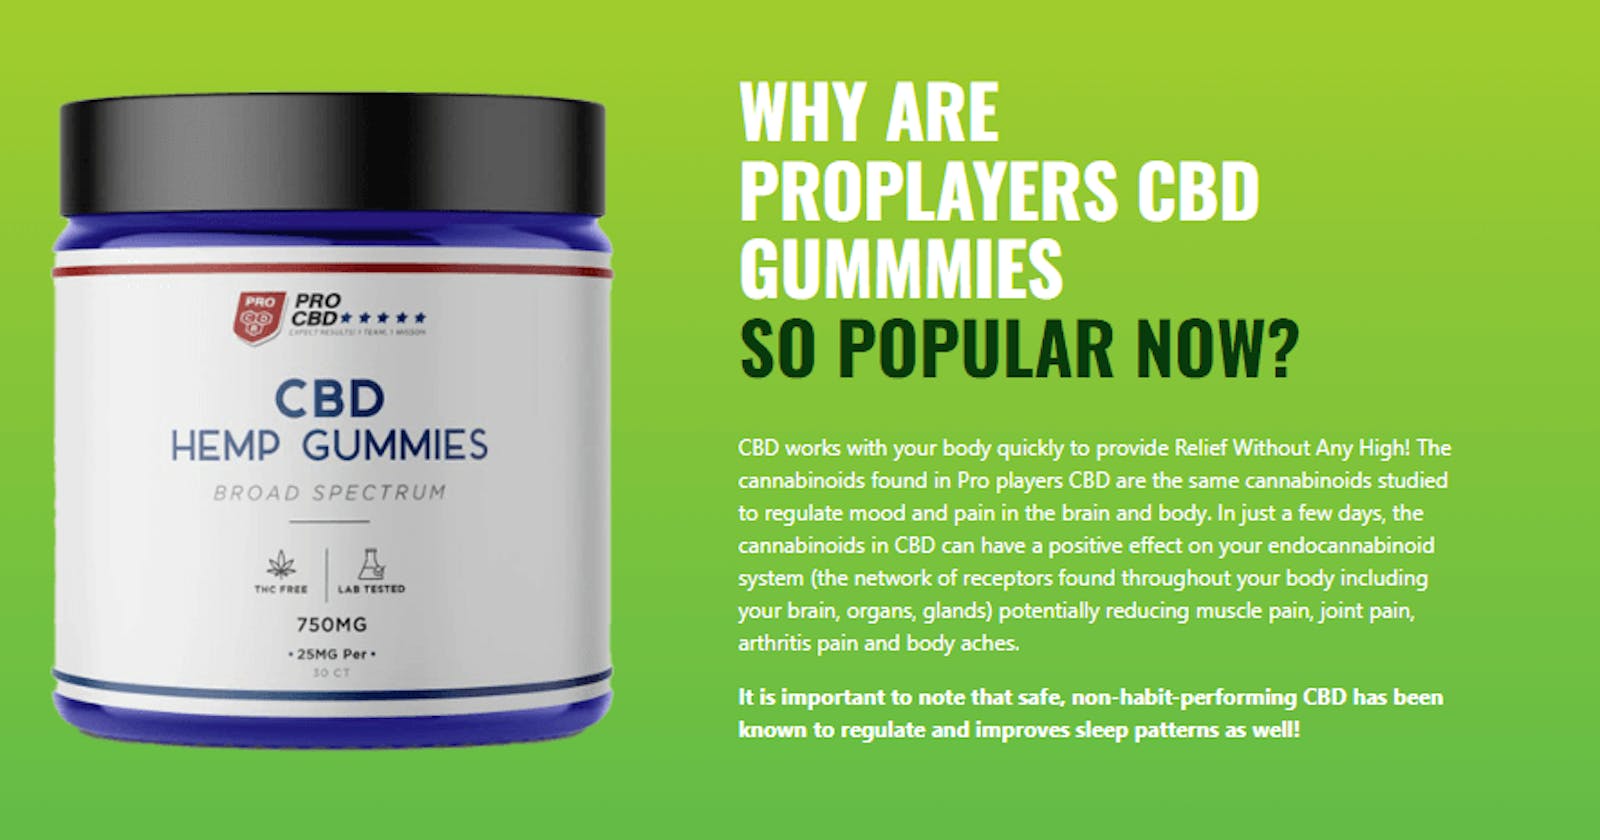 Pro CBD Hemp Gummies Reviews, Benefits, Stress, Chronic Aches, Joint Pain! 100% Pure CBD, Cost & Where To Buy!